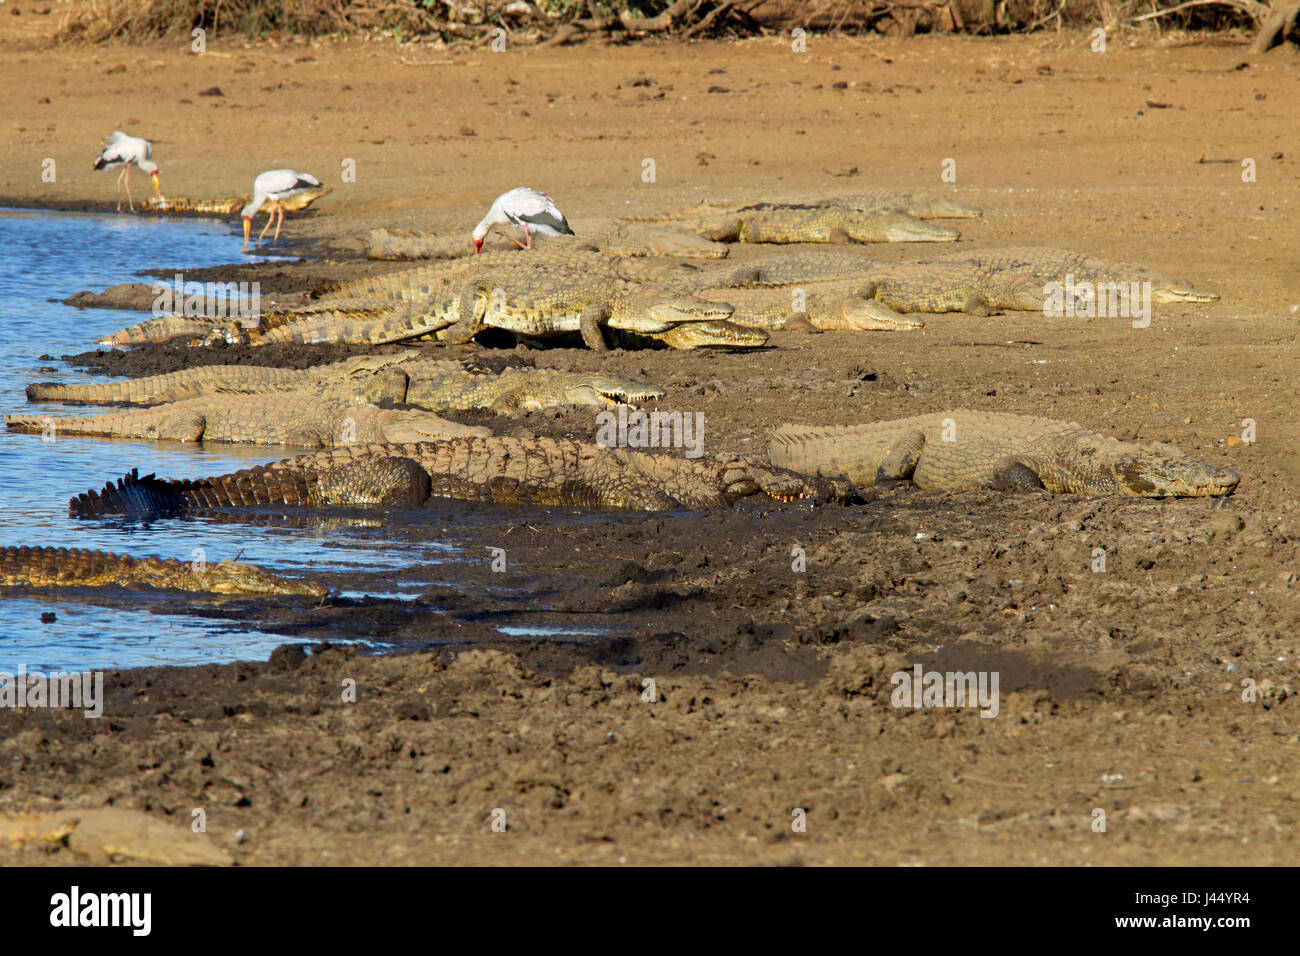 photo of a group basking nile crocodiles Stock Photo